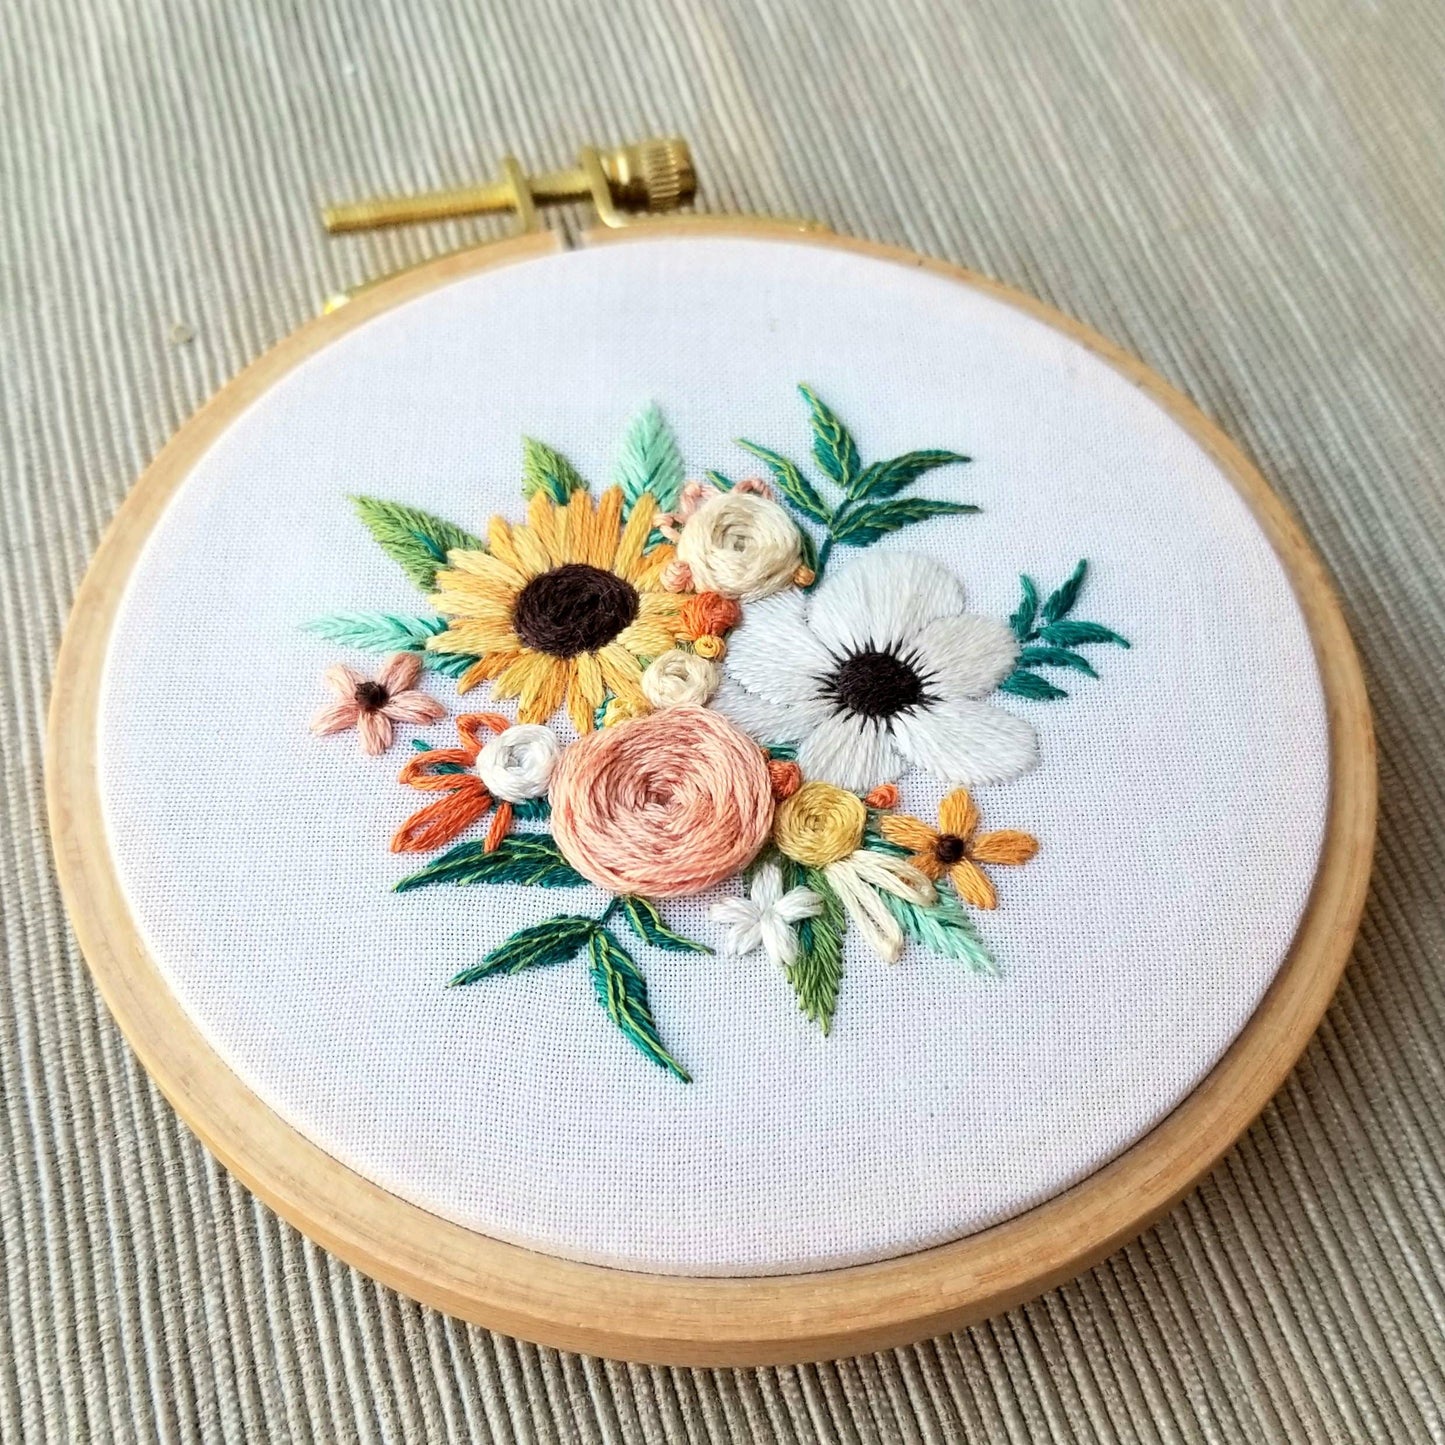 Cozy Harvest Beginner Embroidery Kit